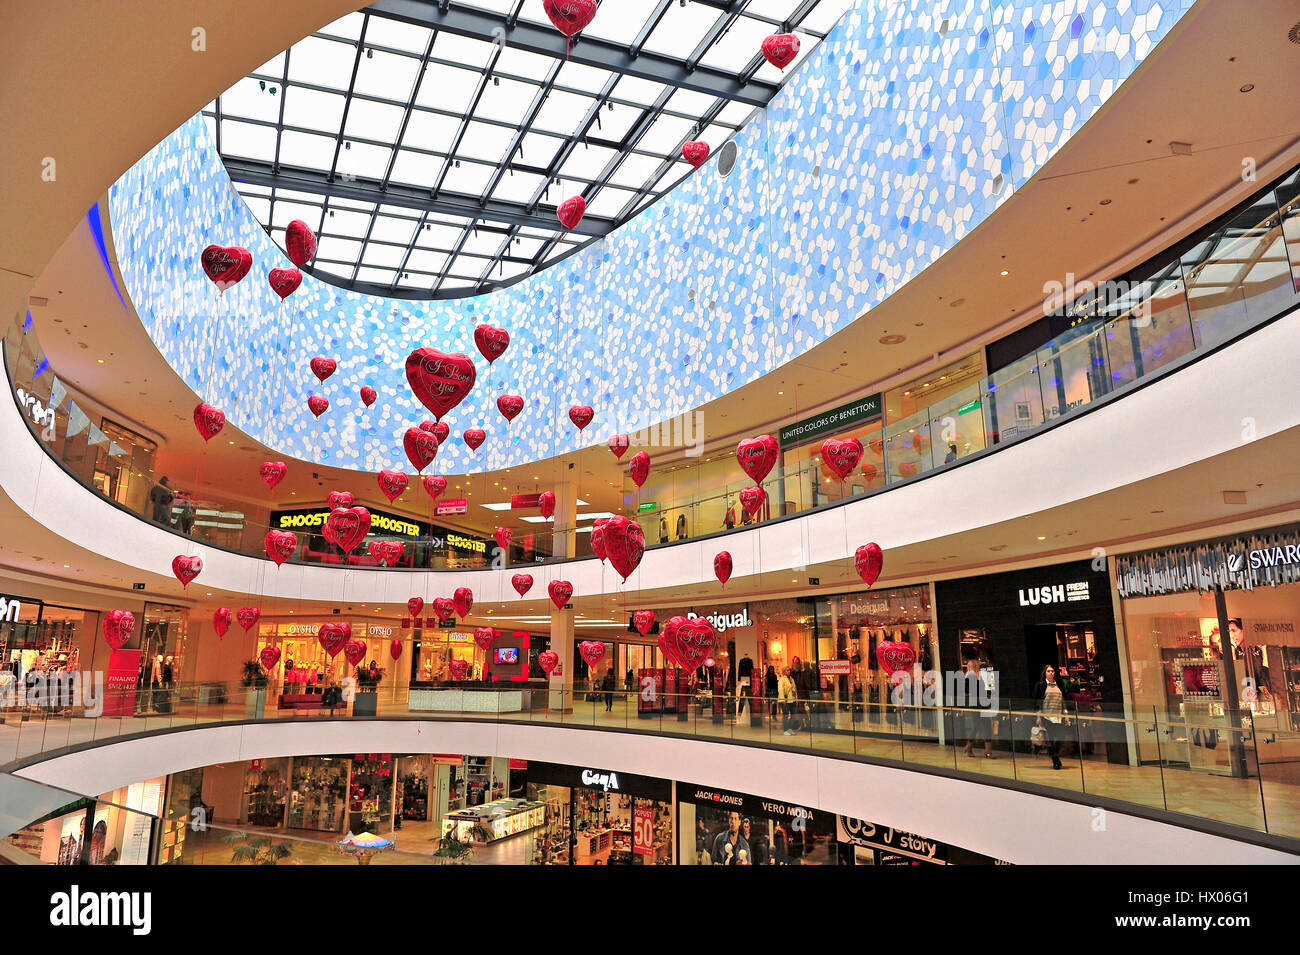 SPLIT, CROATIA - FEBRUARY 18: Atrium of Mall of Split shopping center Stock  Photo - Alamy